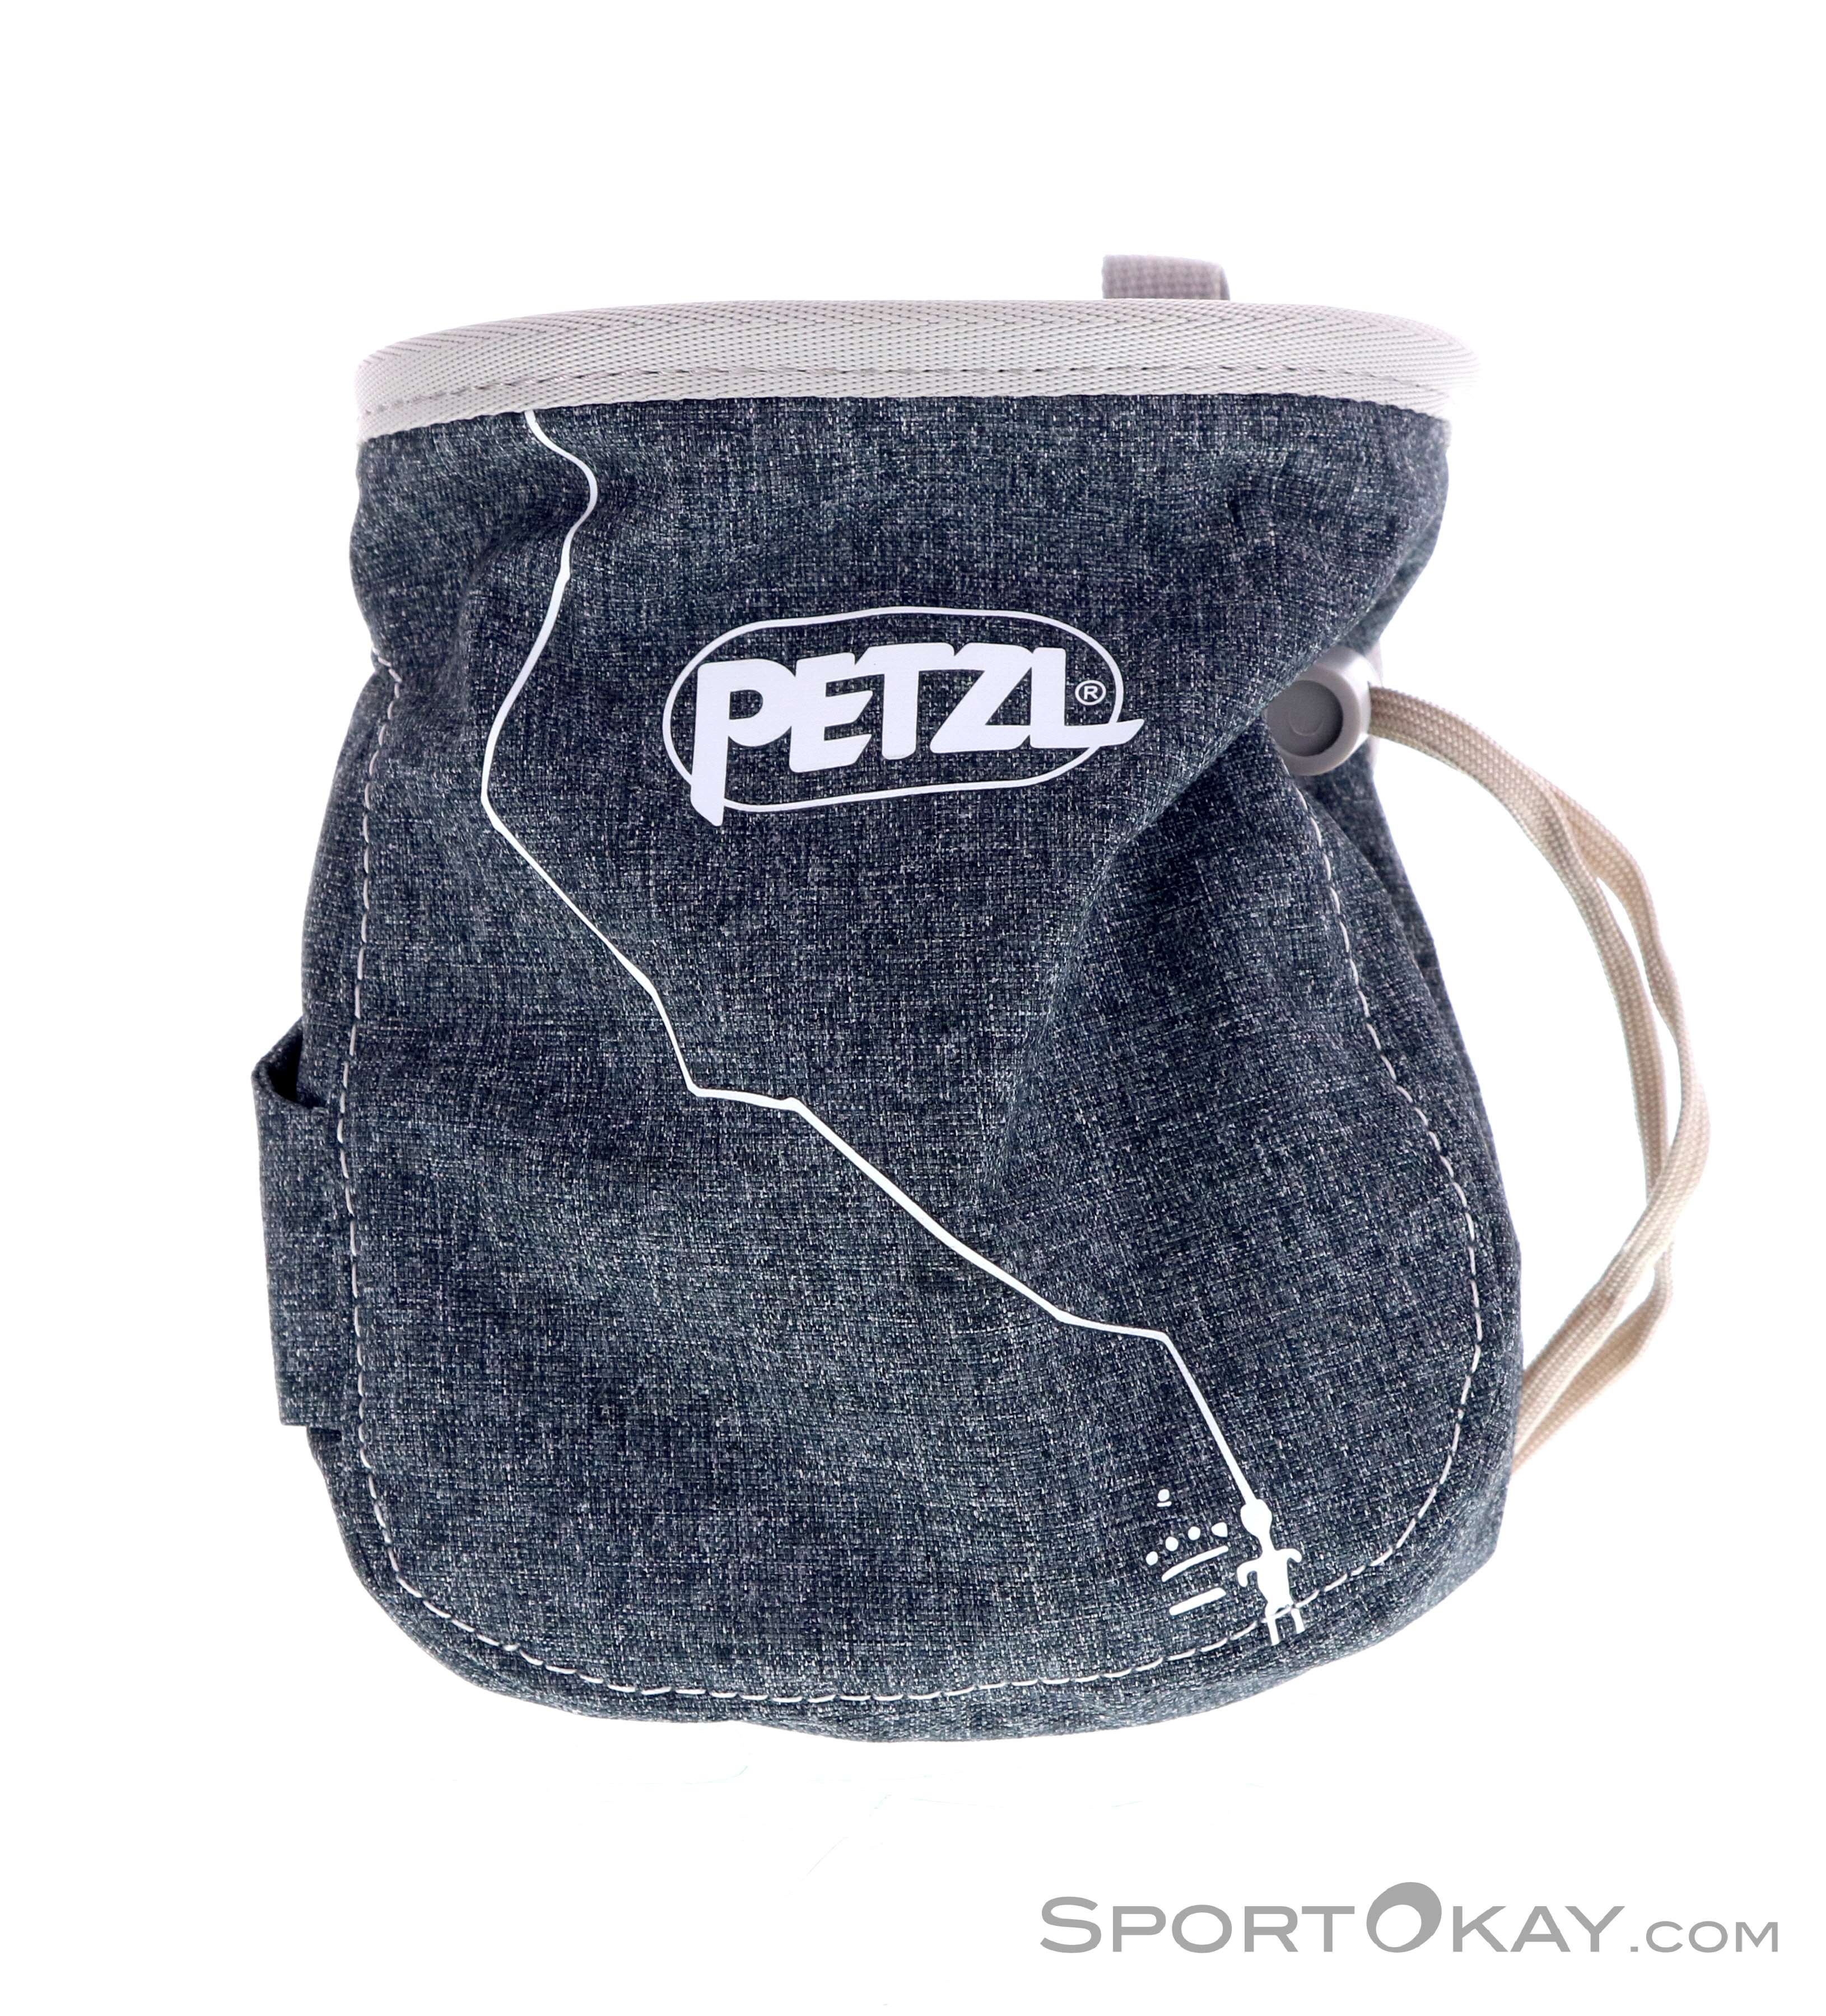 Petzl Saka Chalk Bag - Chalk Bags - Climbing Accessory